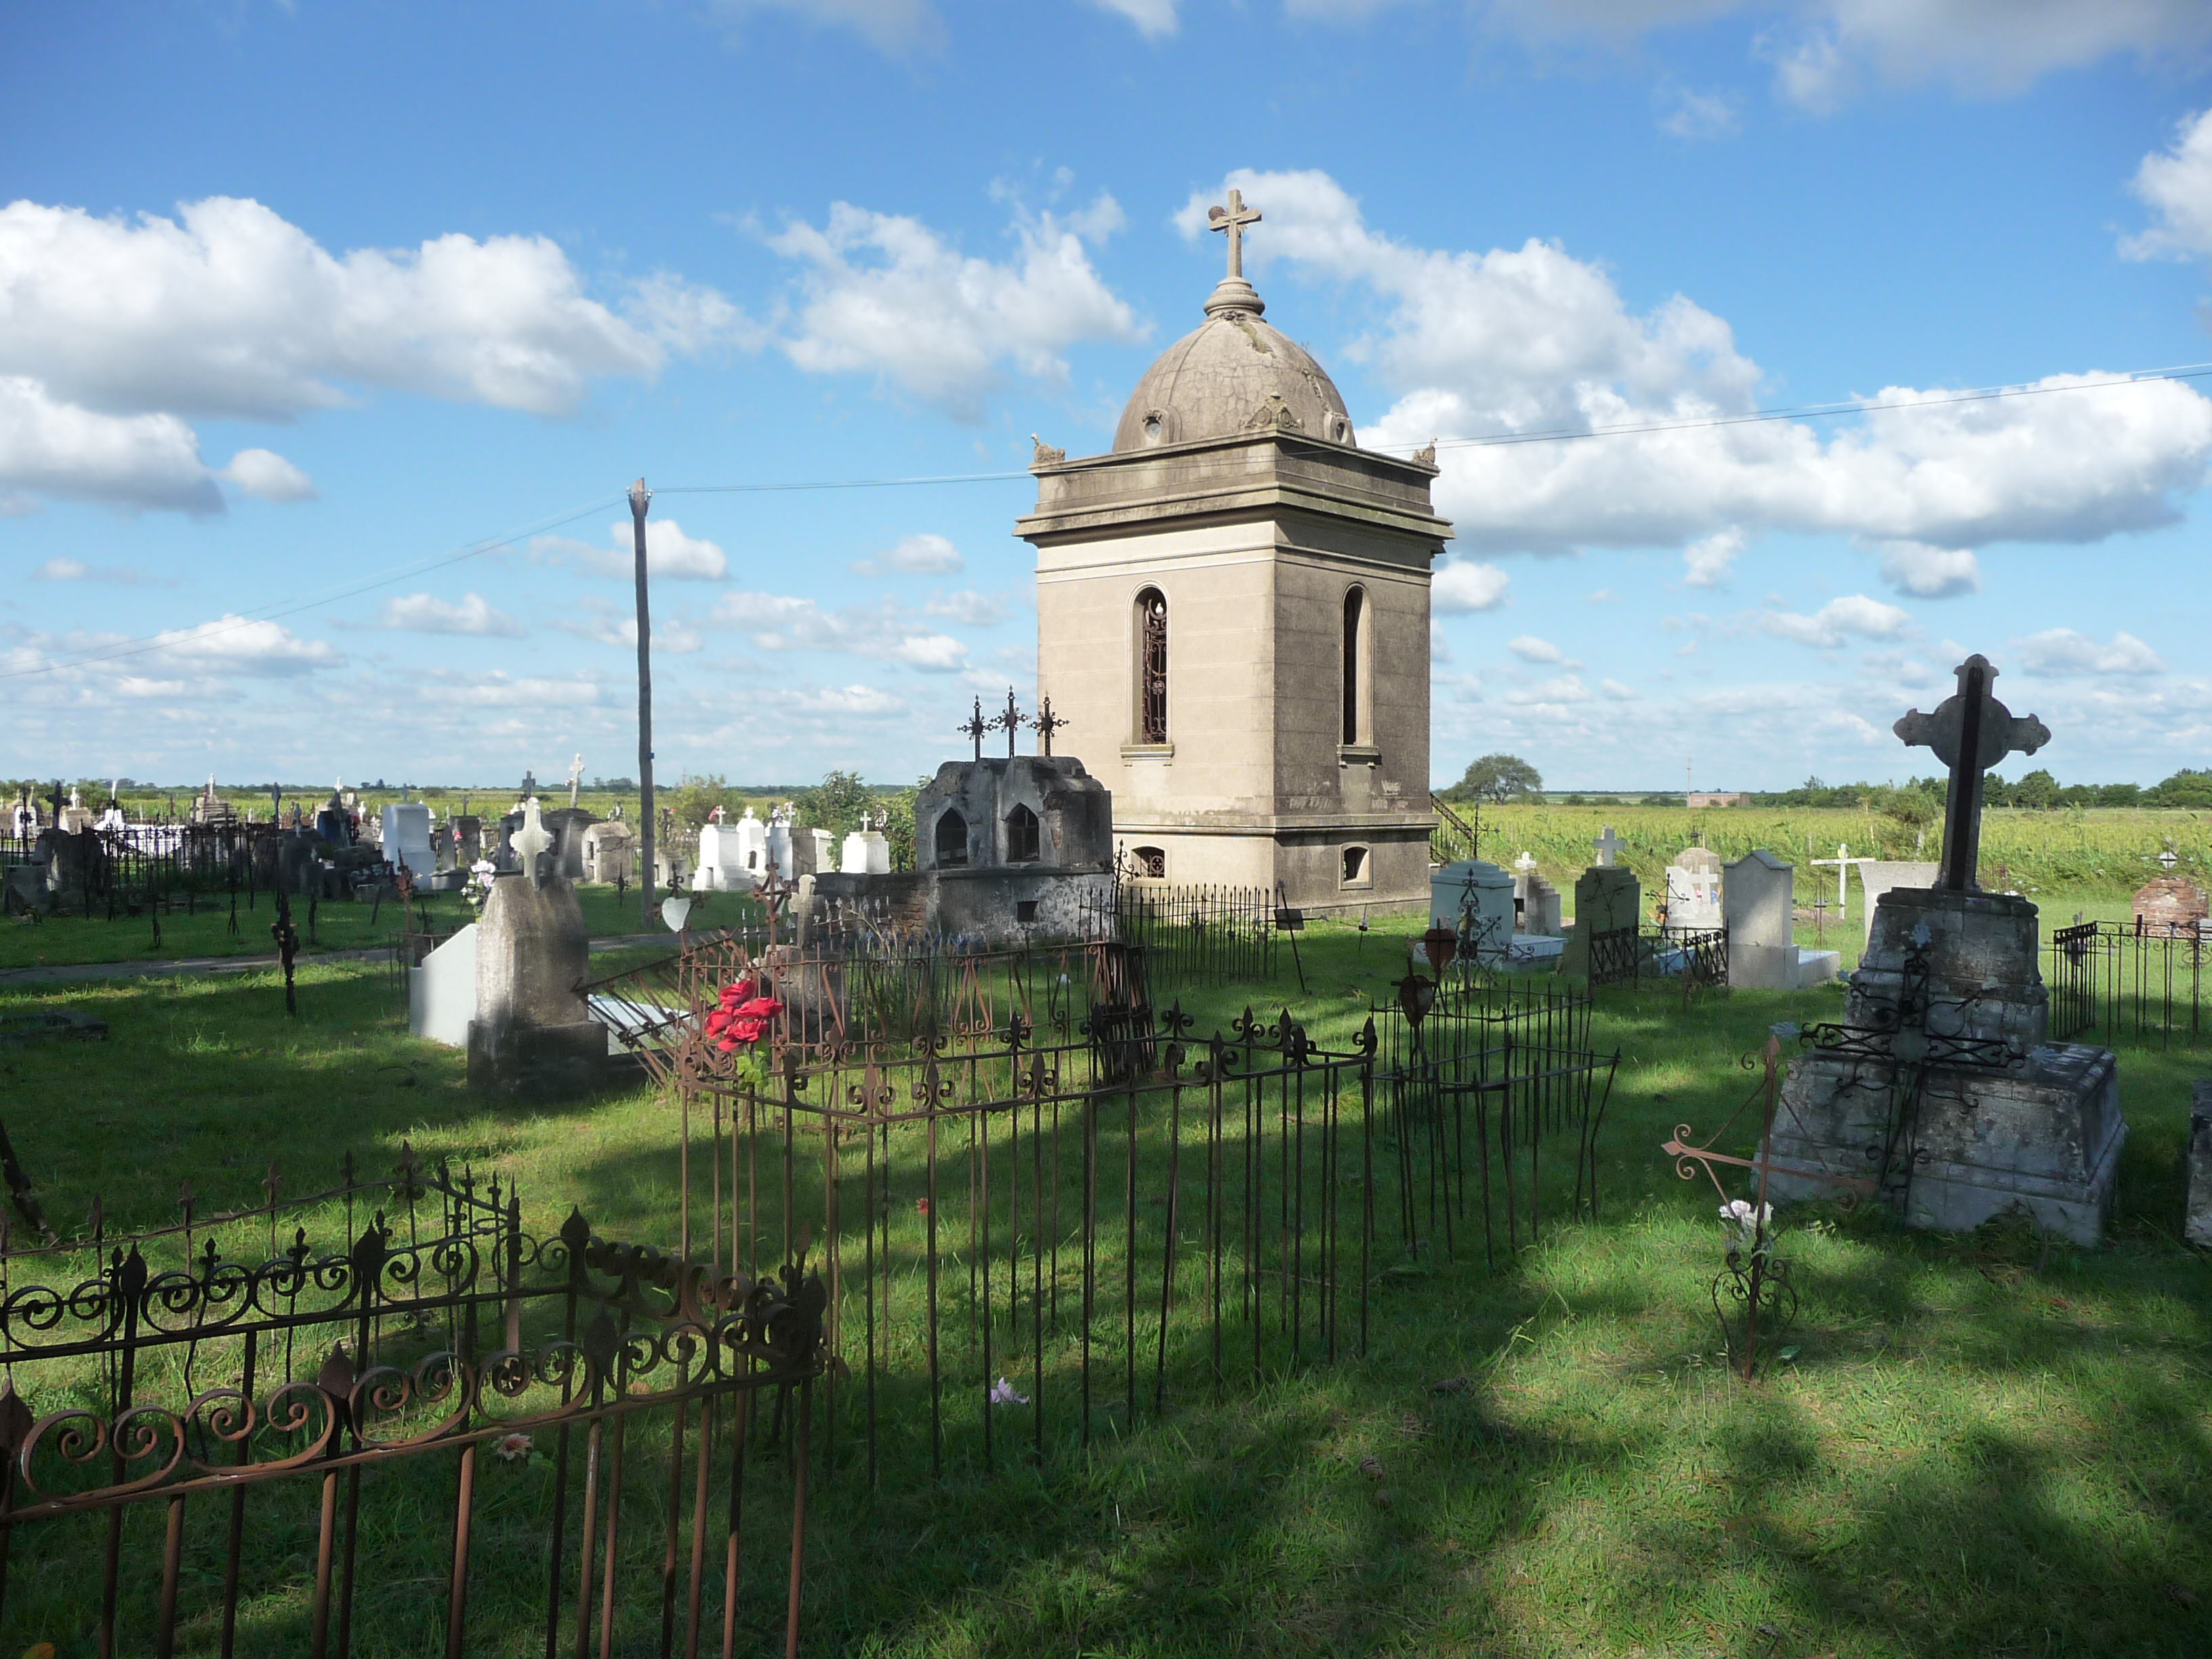 Church cemetery in Santa Maria. Source: Oscar Herrlein.